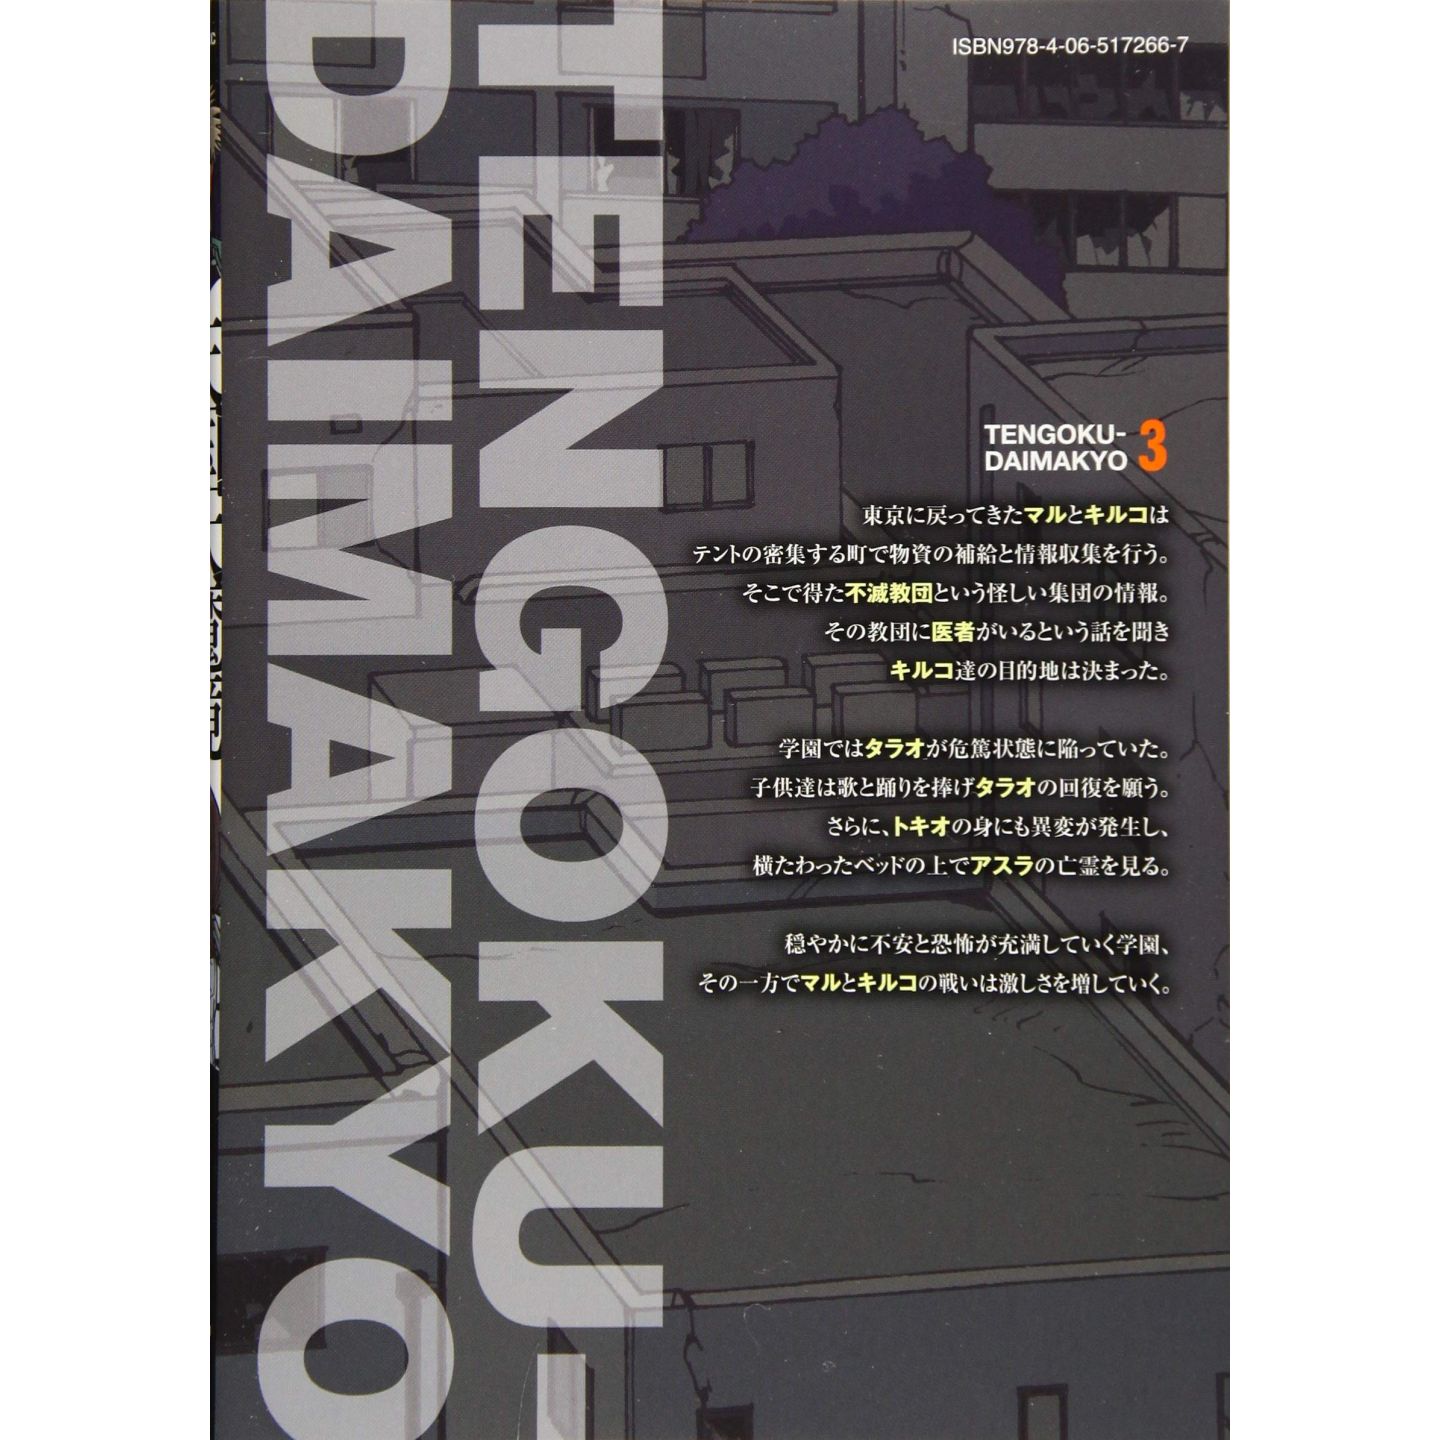 Tengoku daimakyo 7 comic anime Masakazu Ishiguro Japanese Book